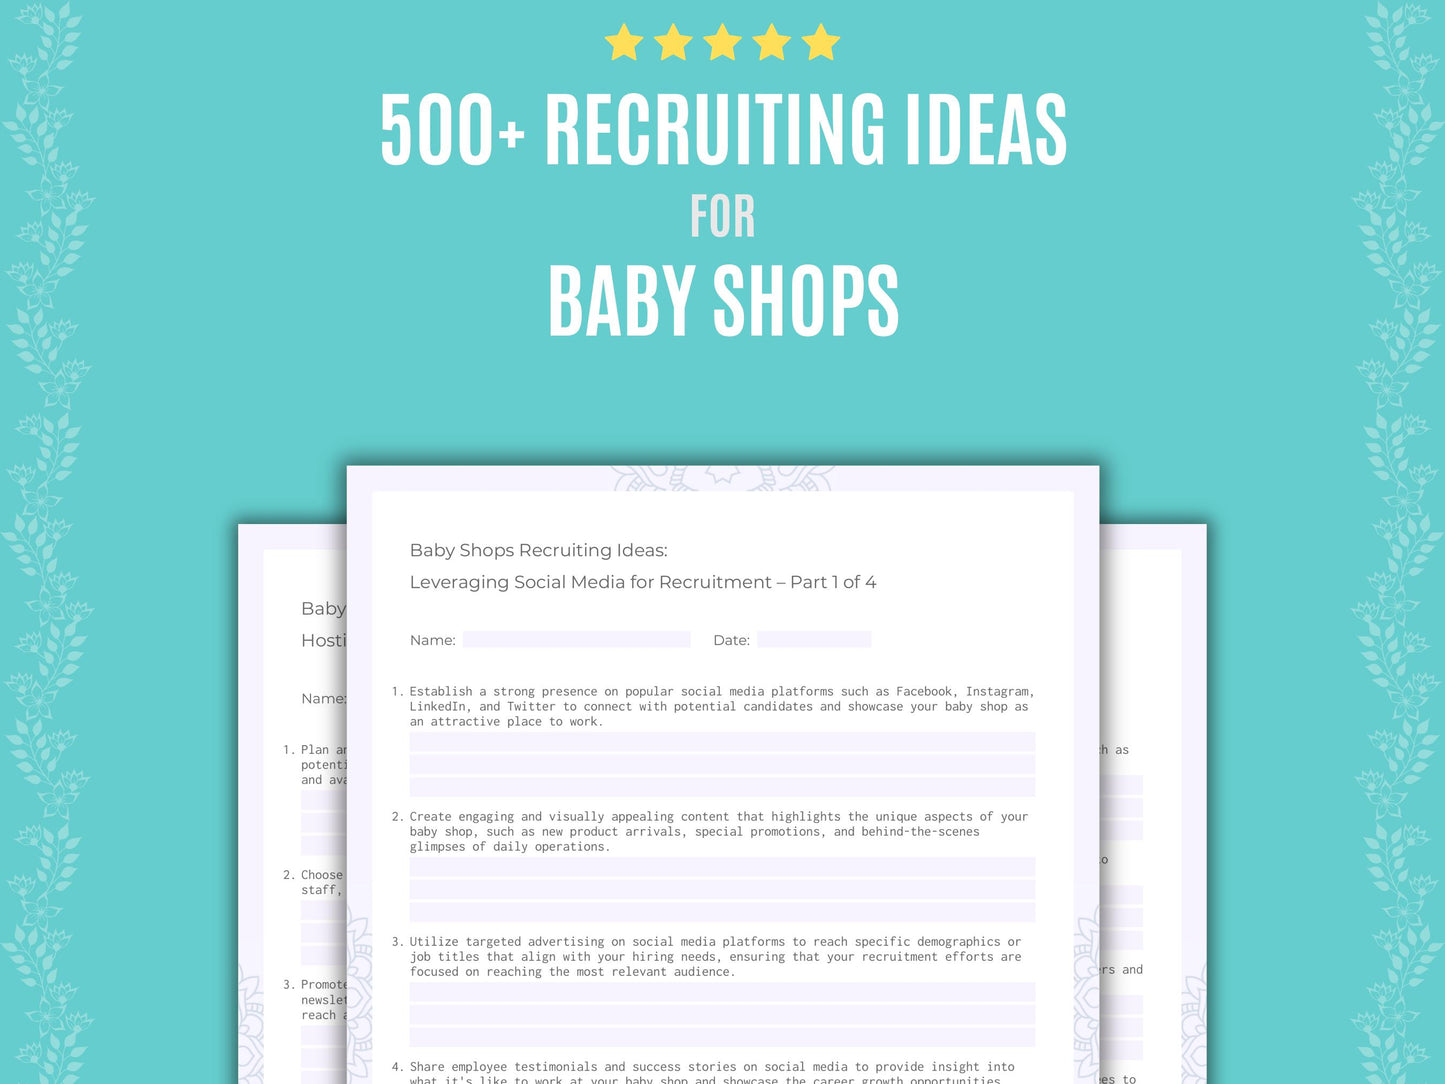 Baby Shops Business Workbook